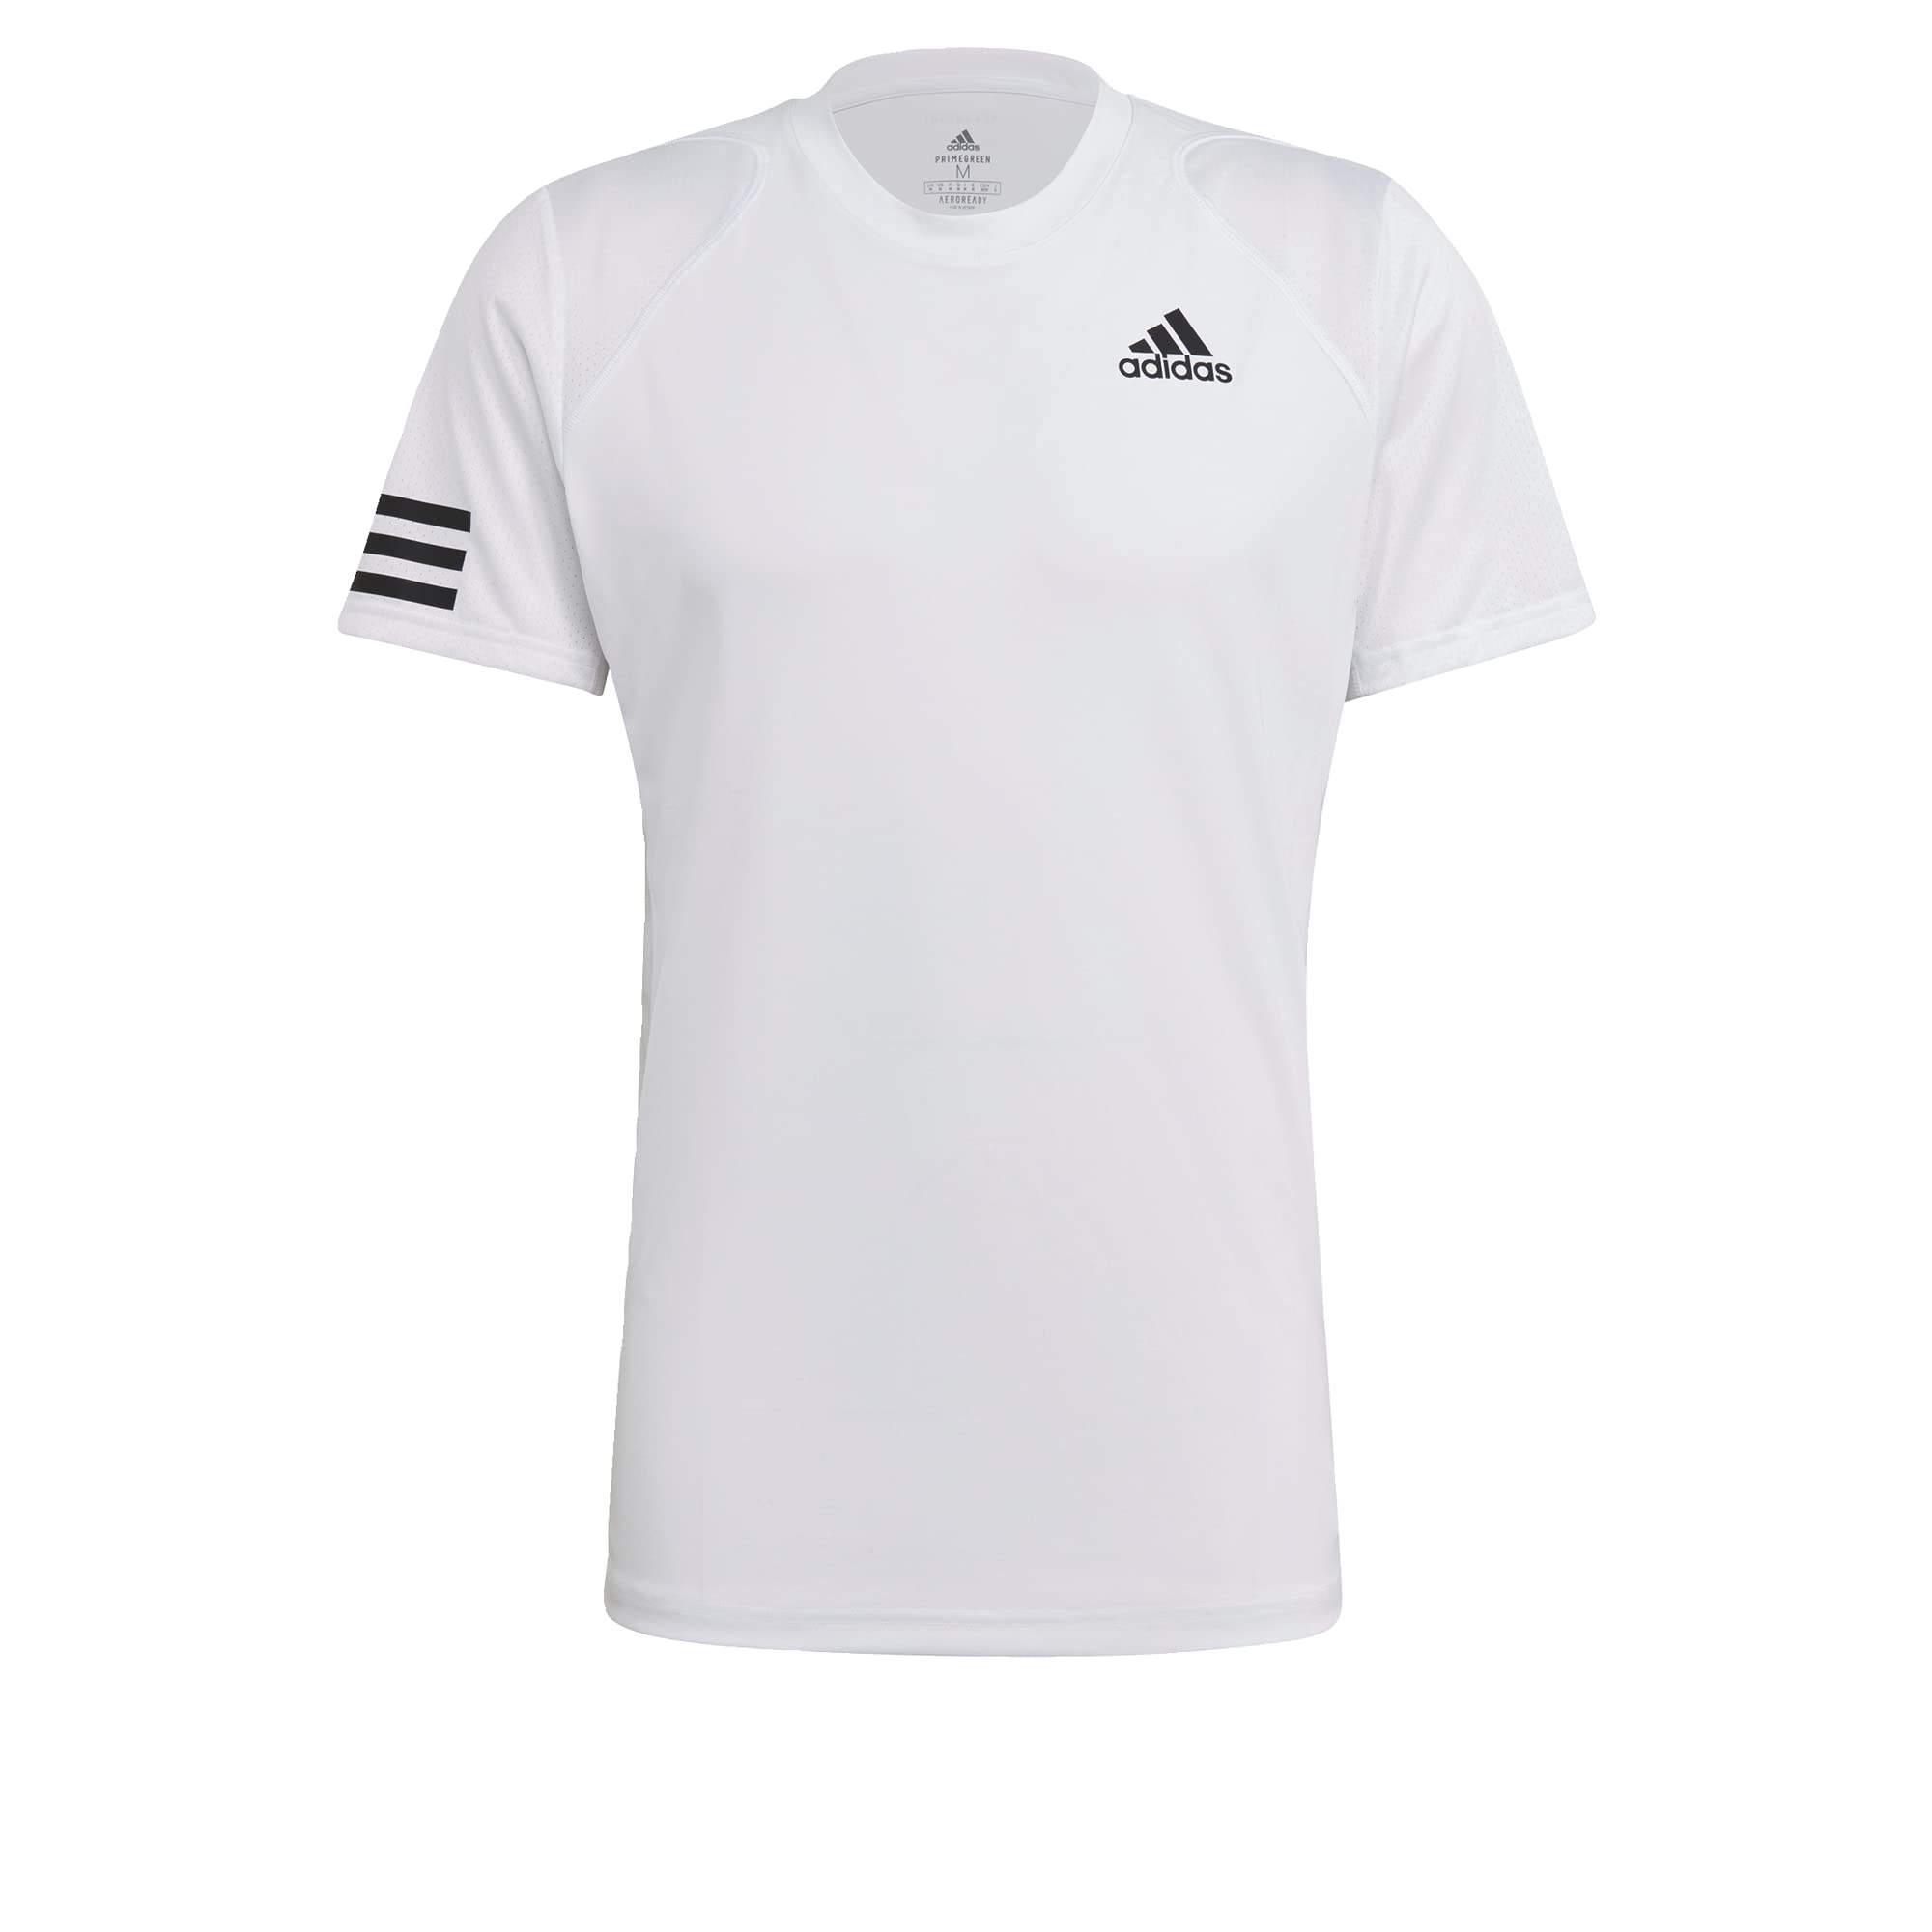 adidas Men's Club Tennis 3-Stripes Tee, White/Black, Small